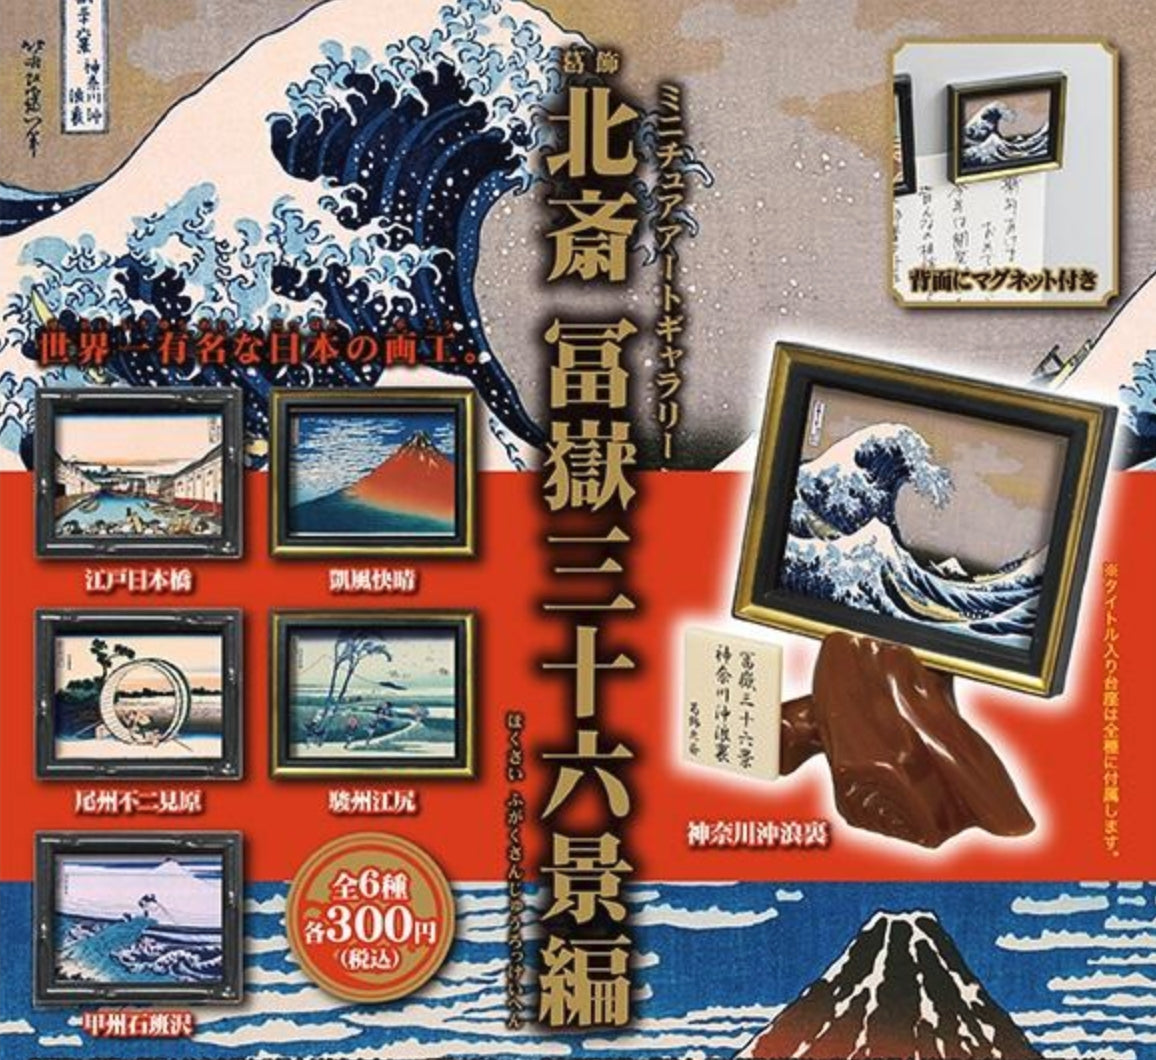 Yell Gashapon Miniature Art Gallery Katsushika Hokusai Ver 6 Collection Figure Set